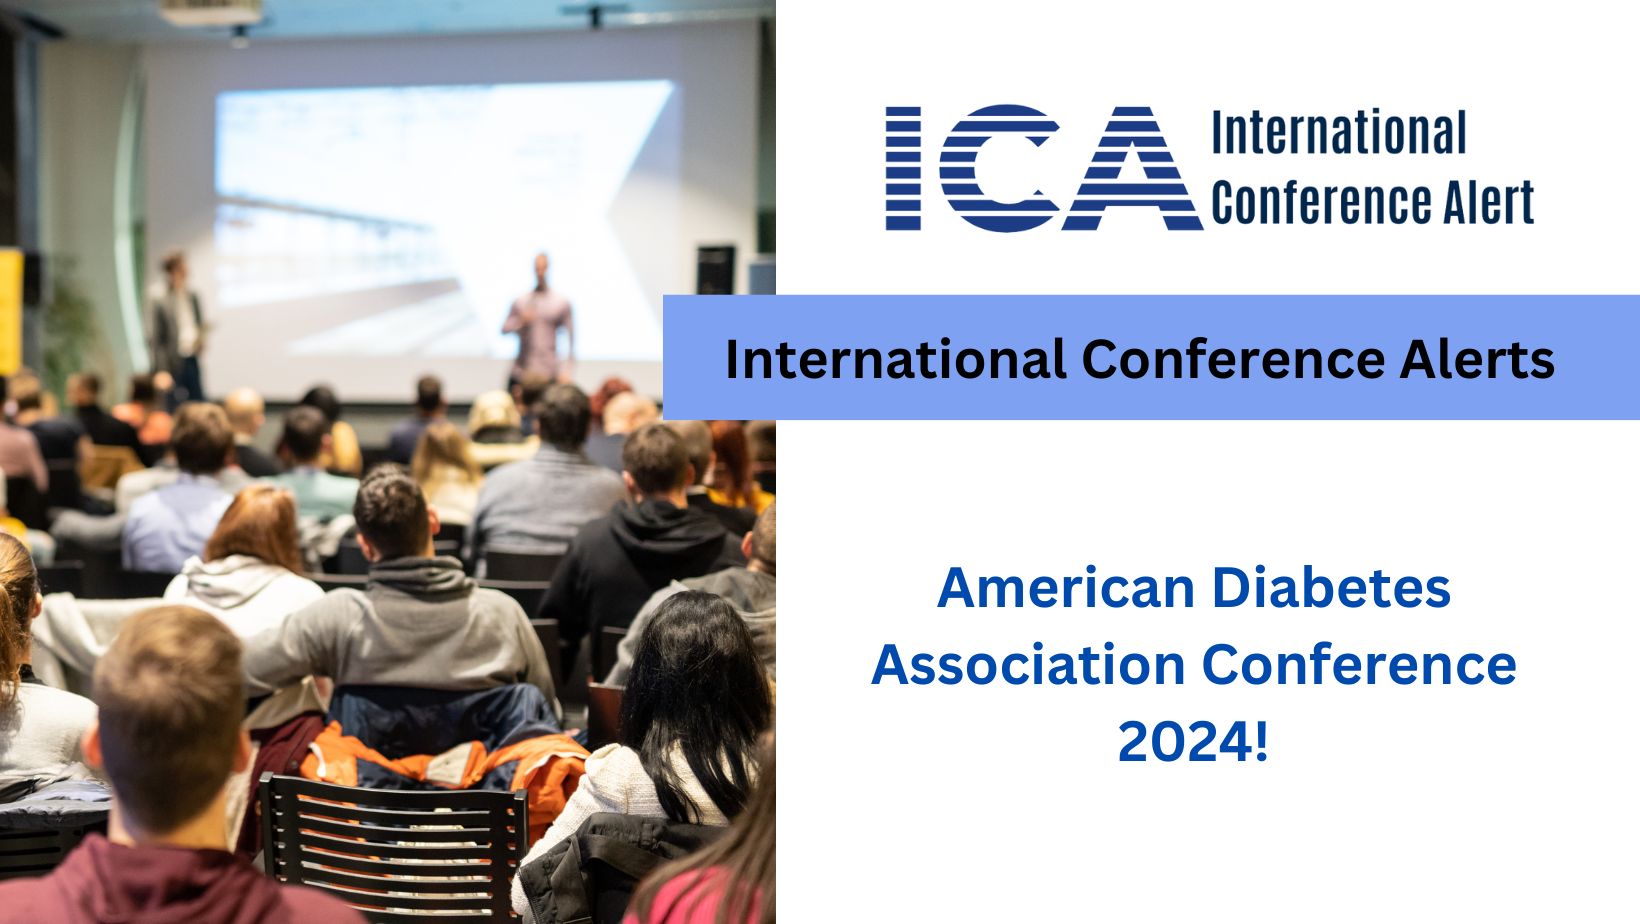  American Diabetes Association Conference 2024!